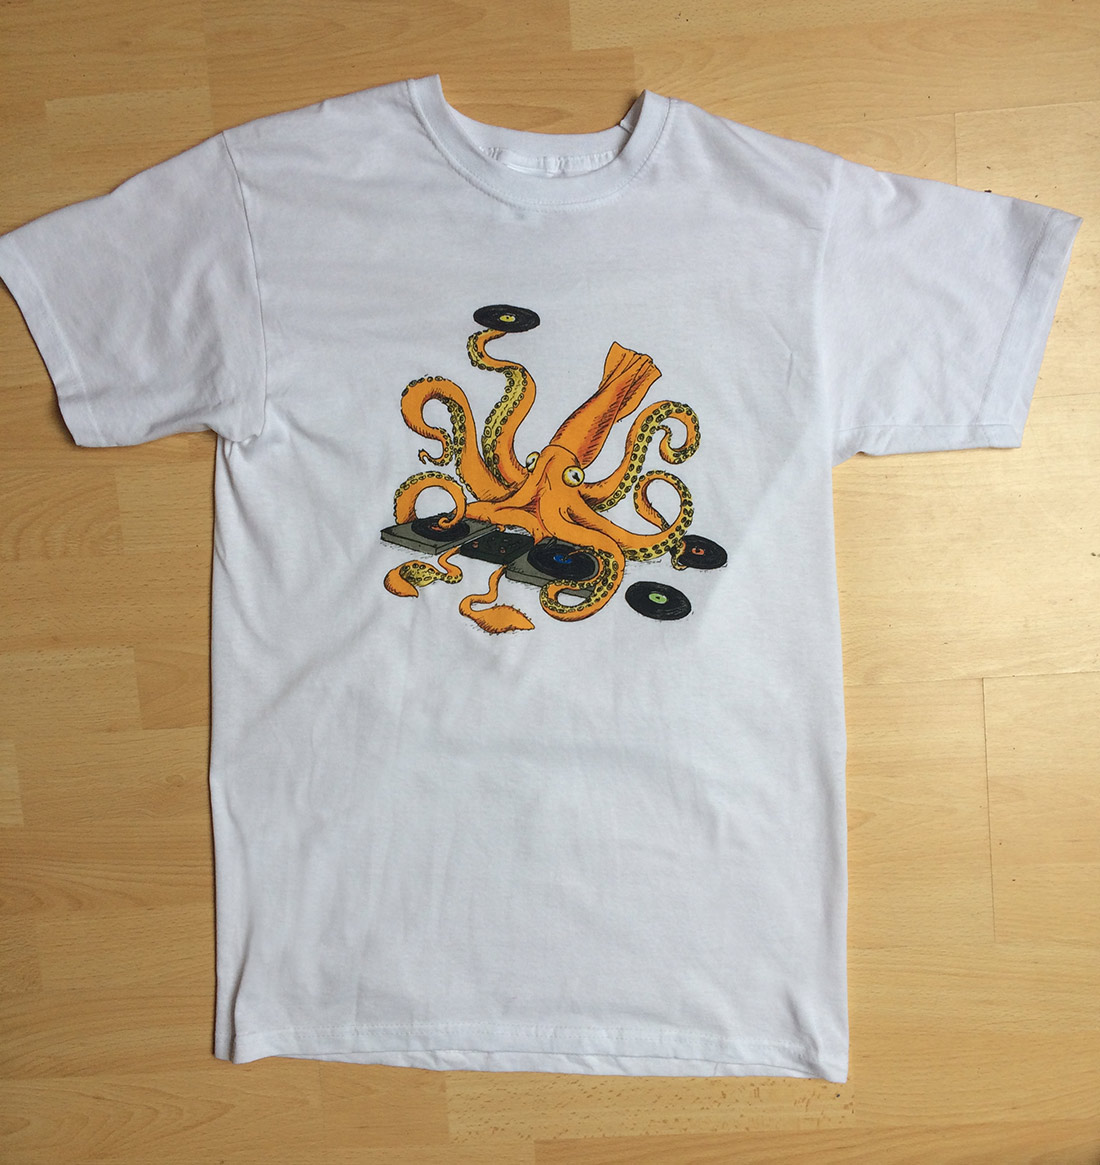 Squid DJ t-shirt - Sven Shaw illustration and hand lettering